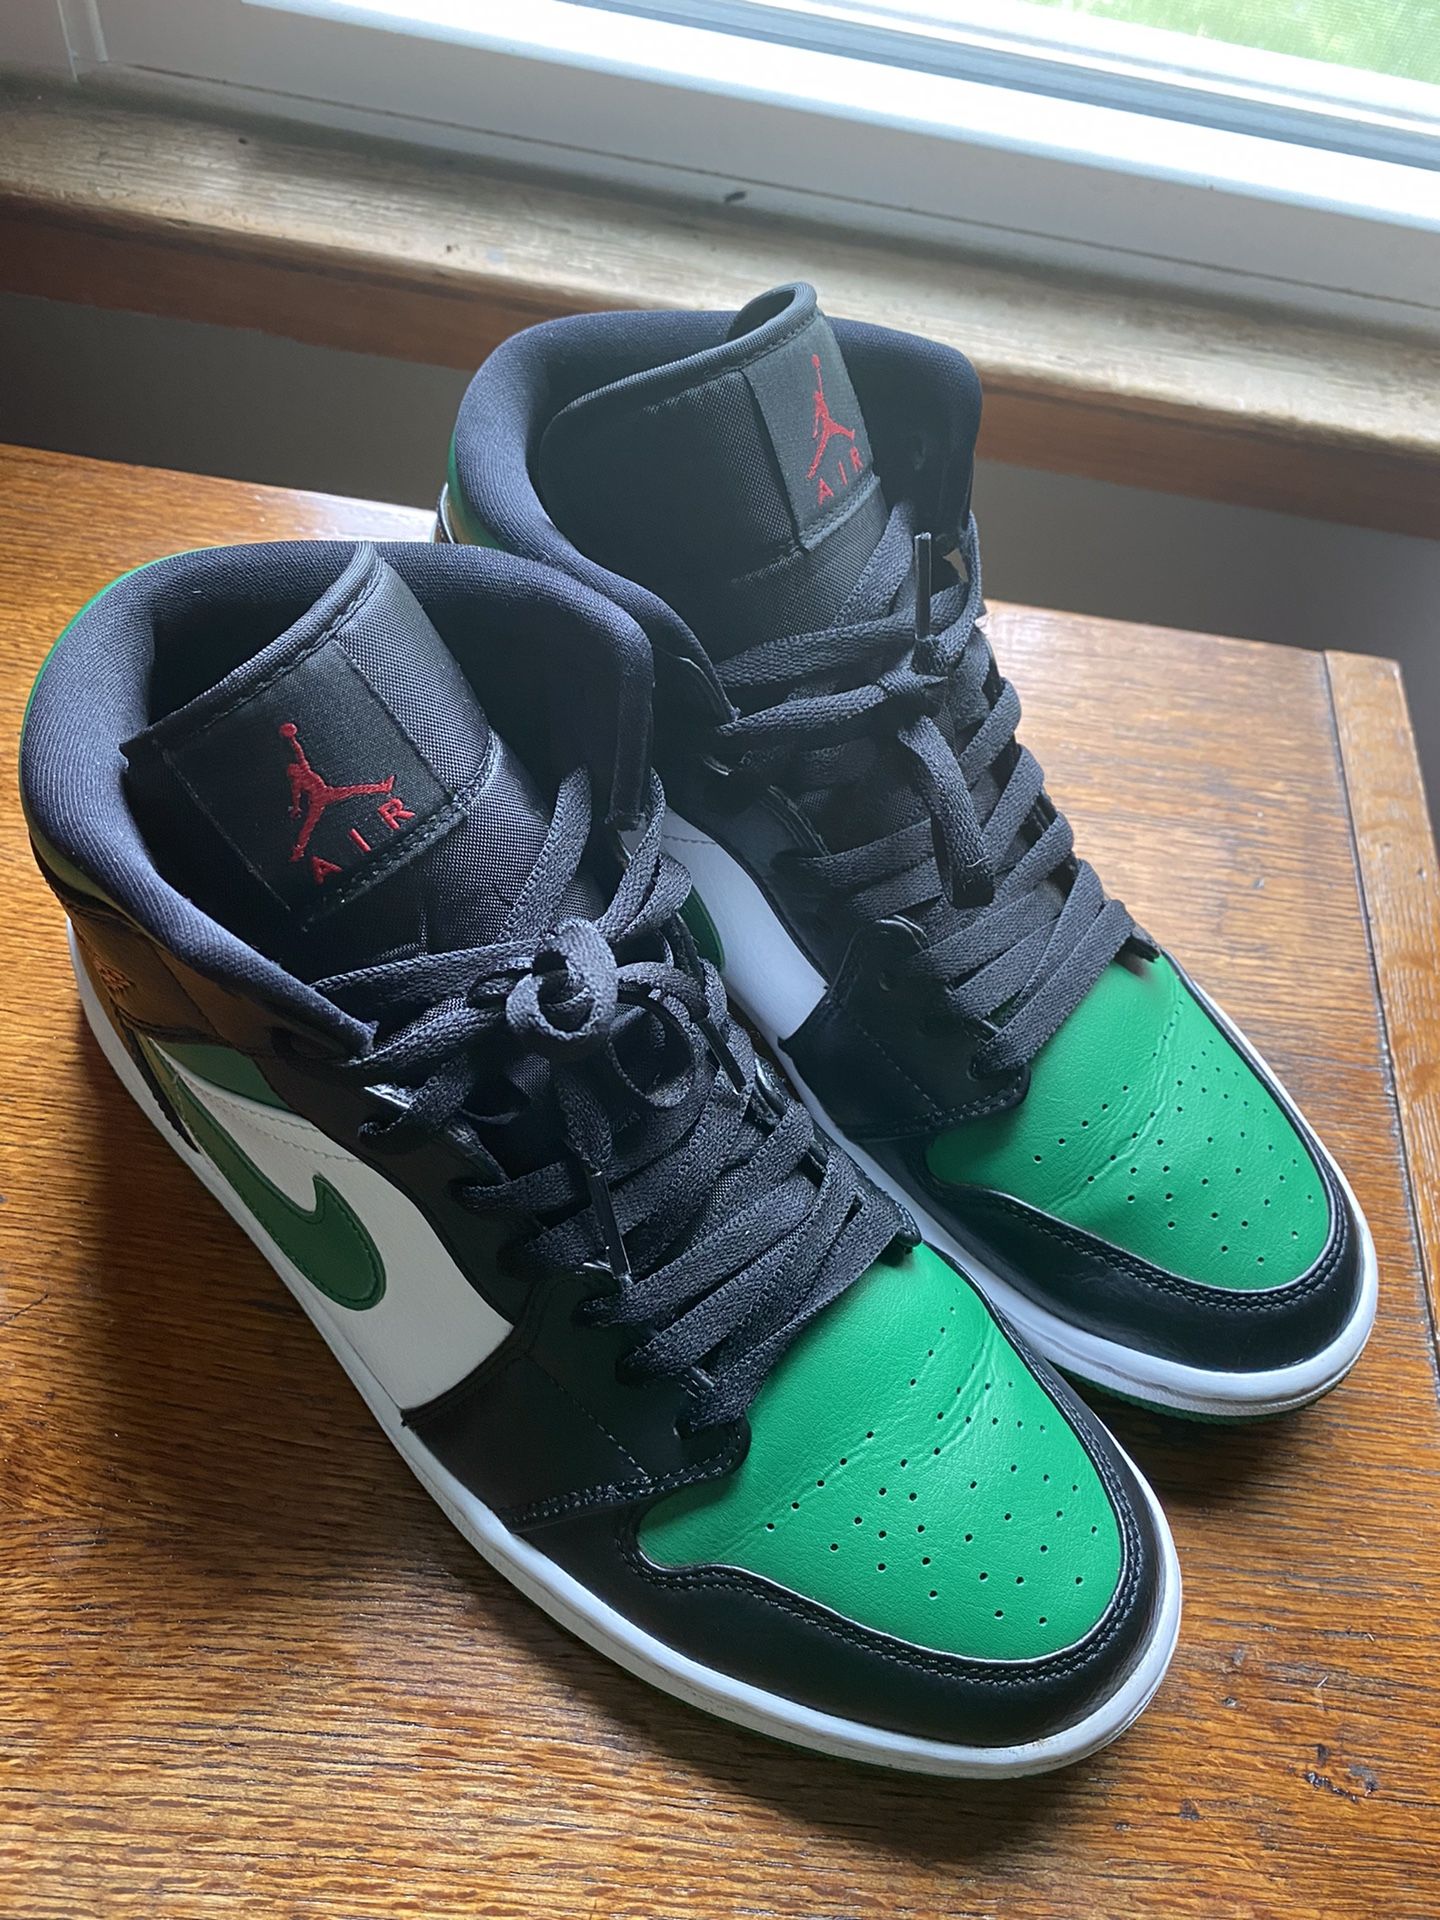 Air Jordan Retro 1 “Green Toe” Men’s Size 10.5